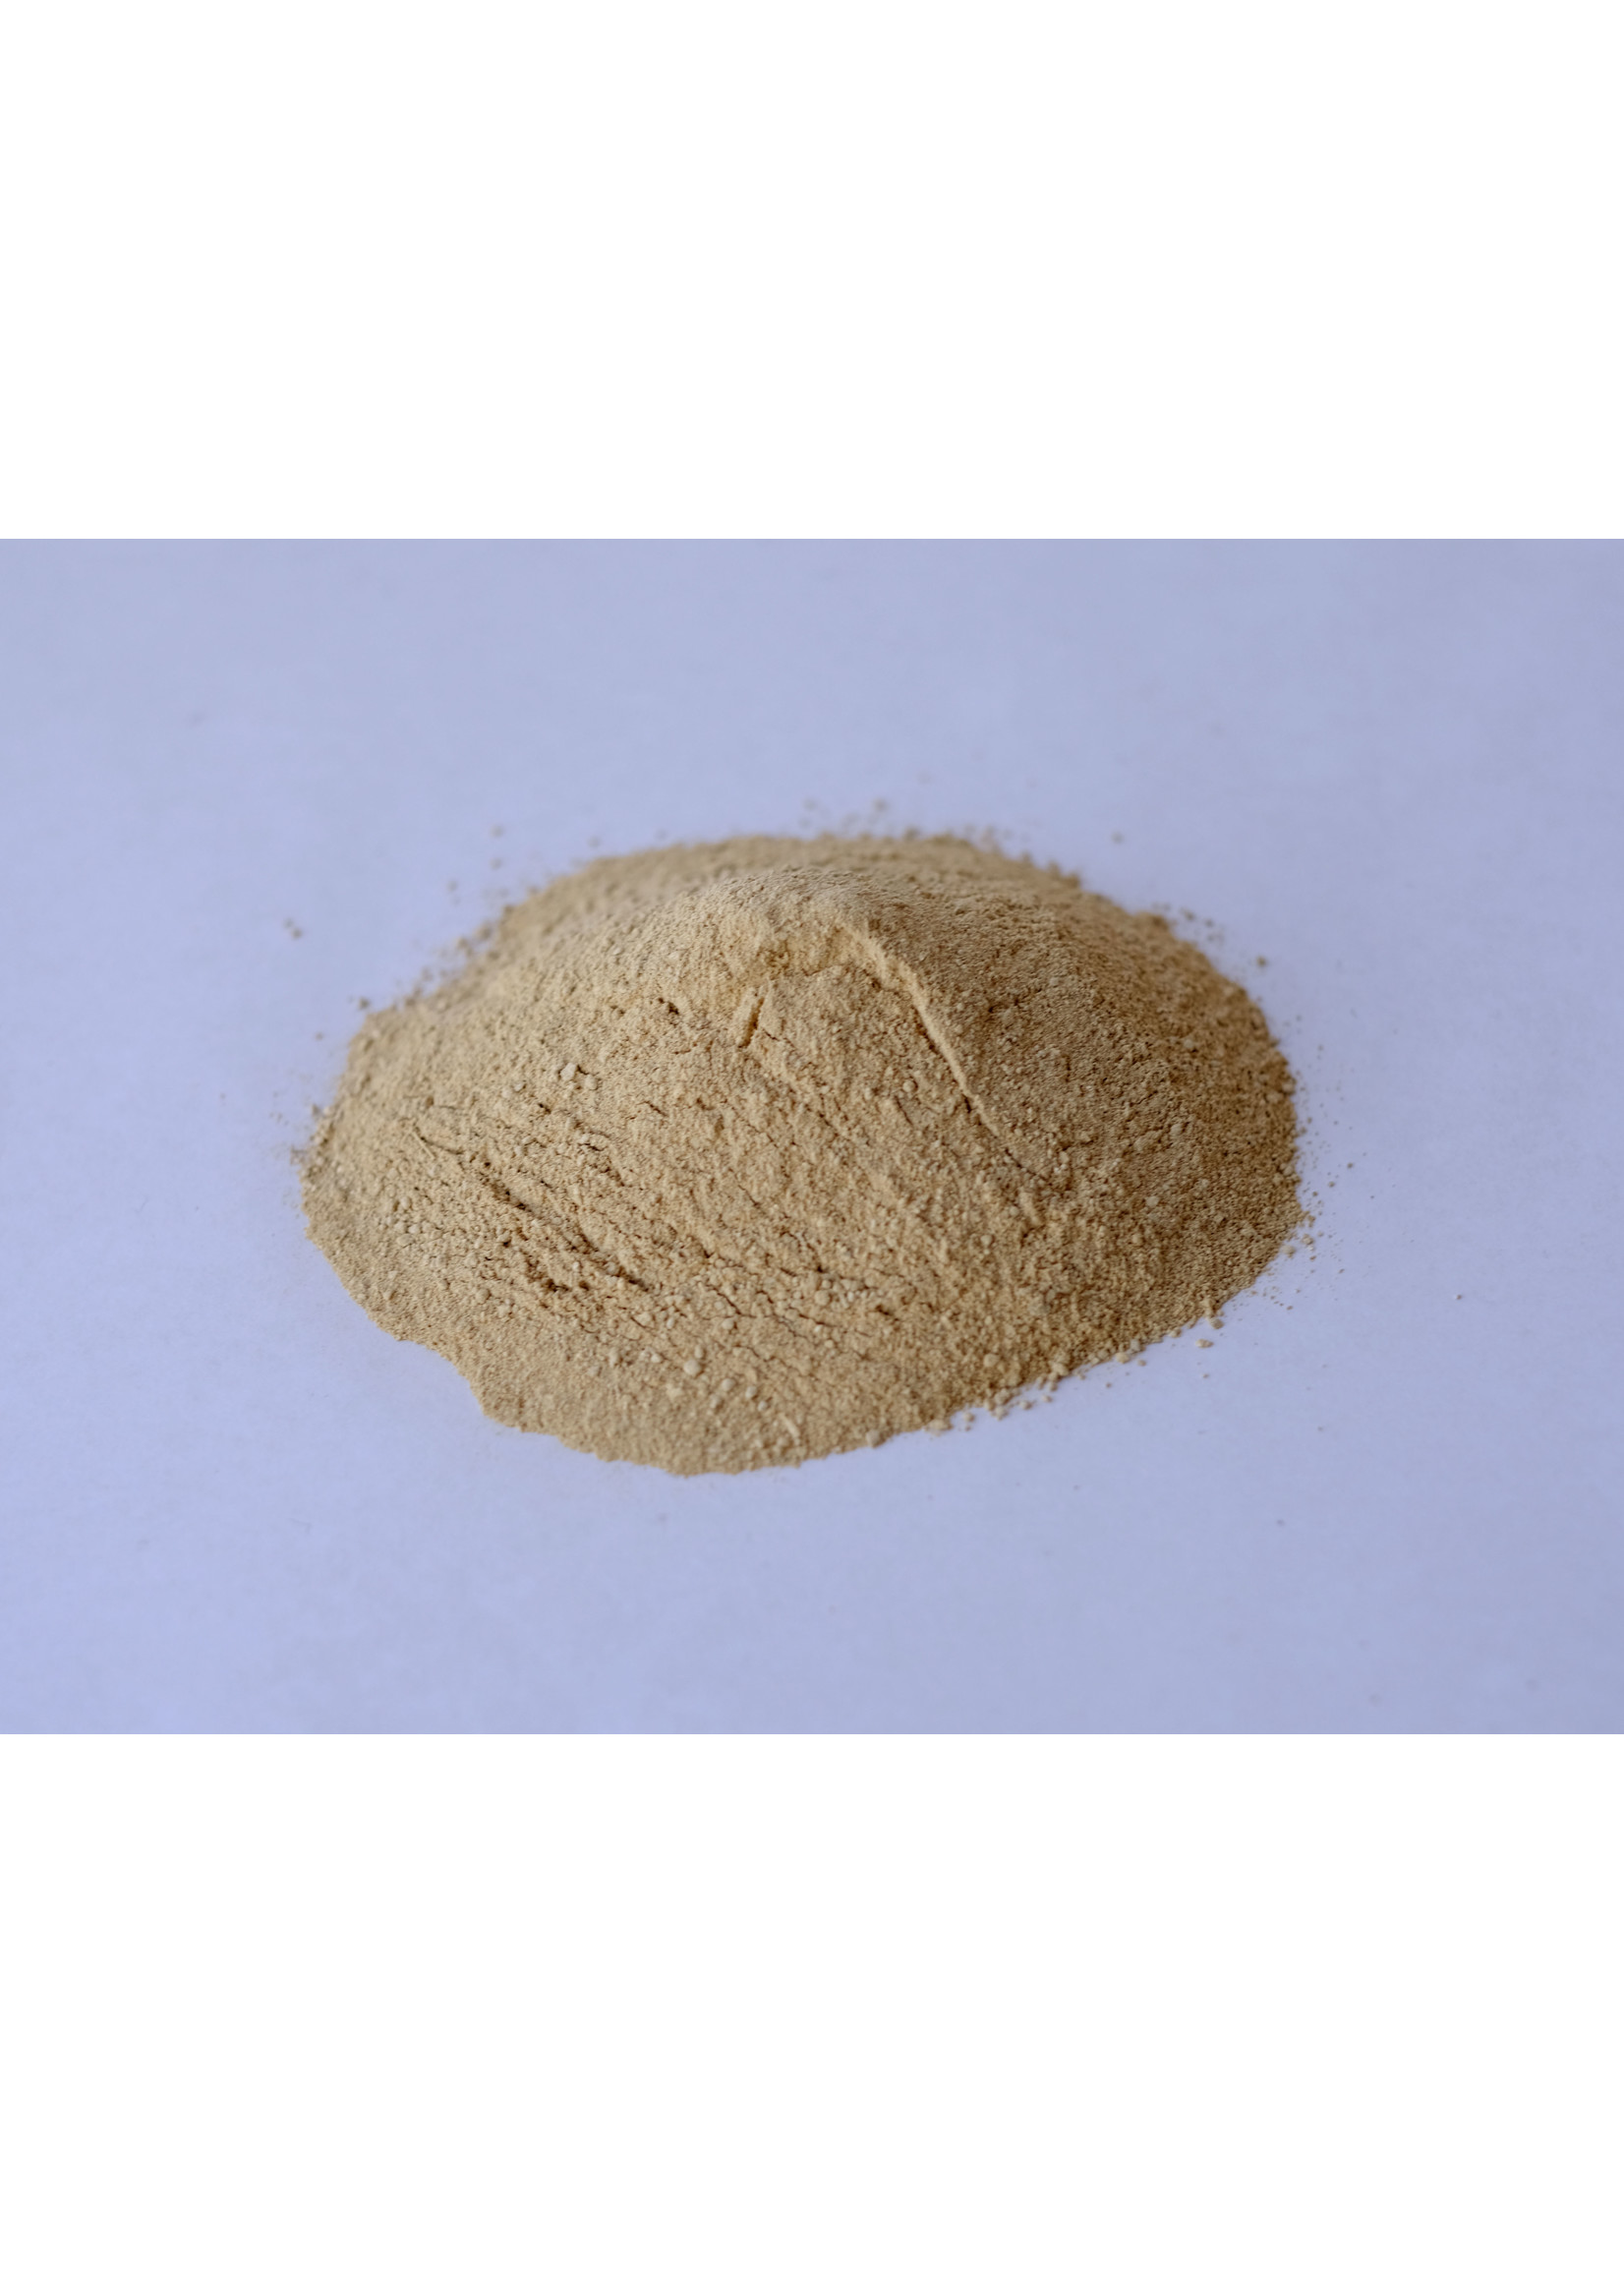 Calphos Rock Phosphate 50 lb /40pallet- Fertoz